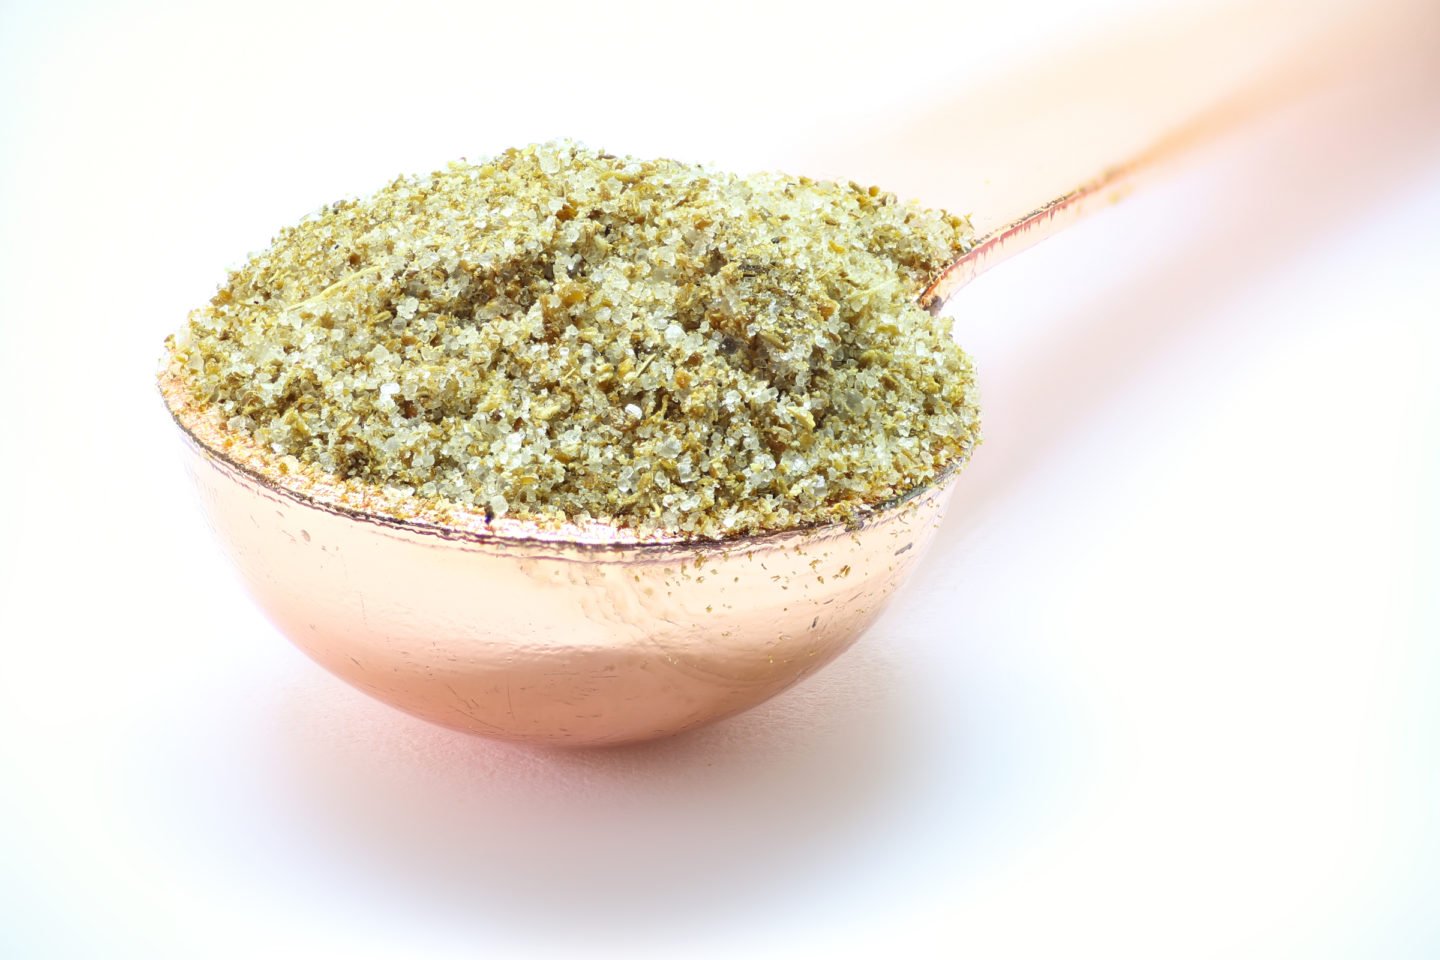 authentic celery salt mix in spoon